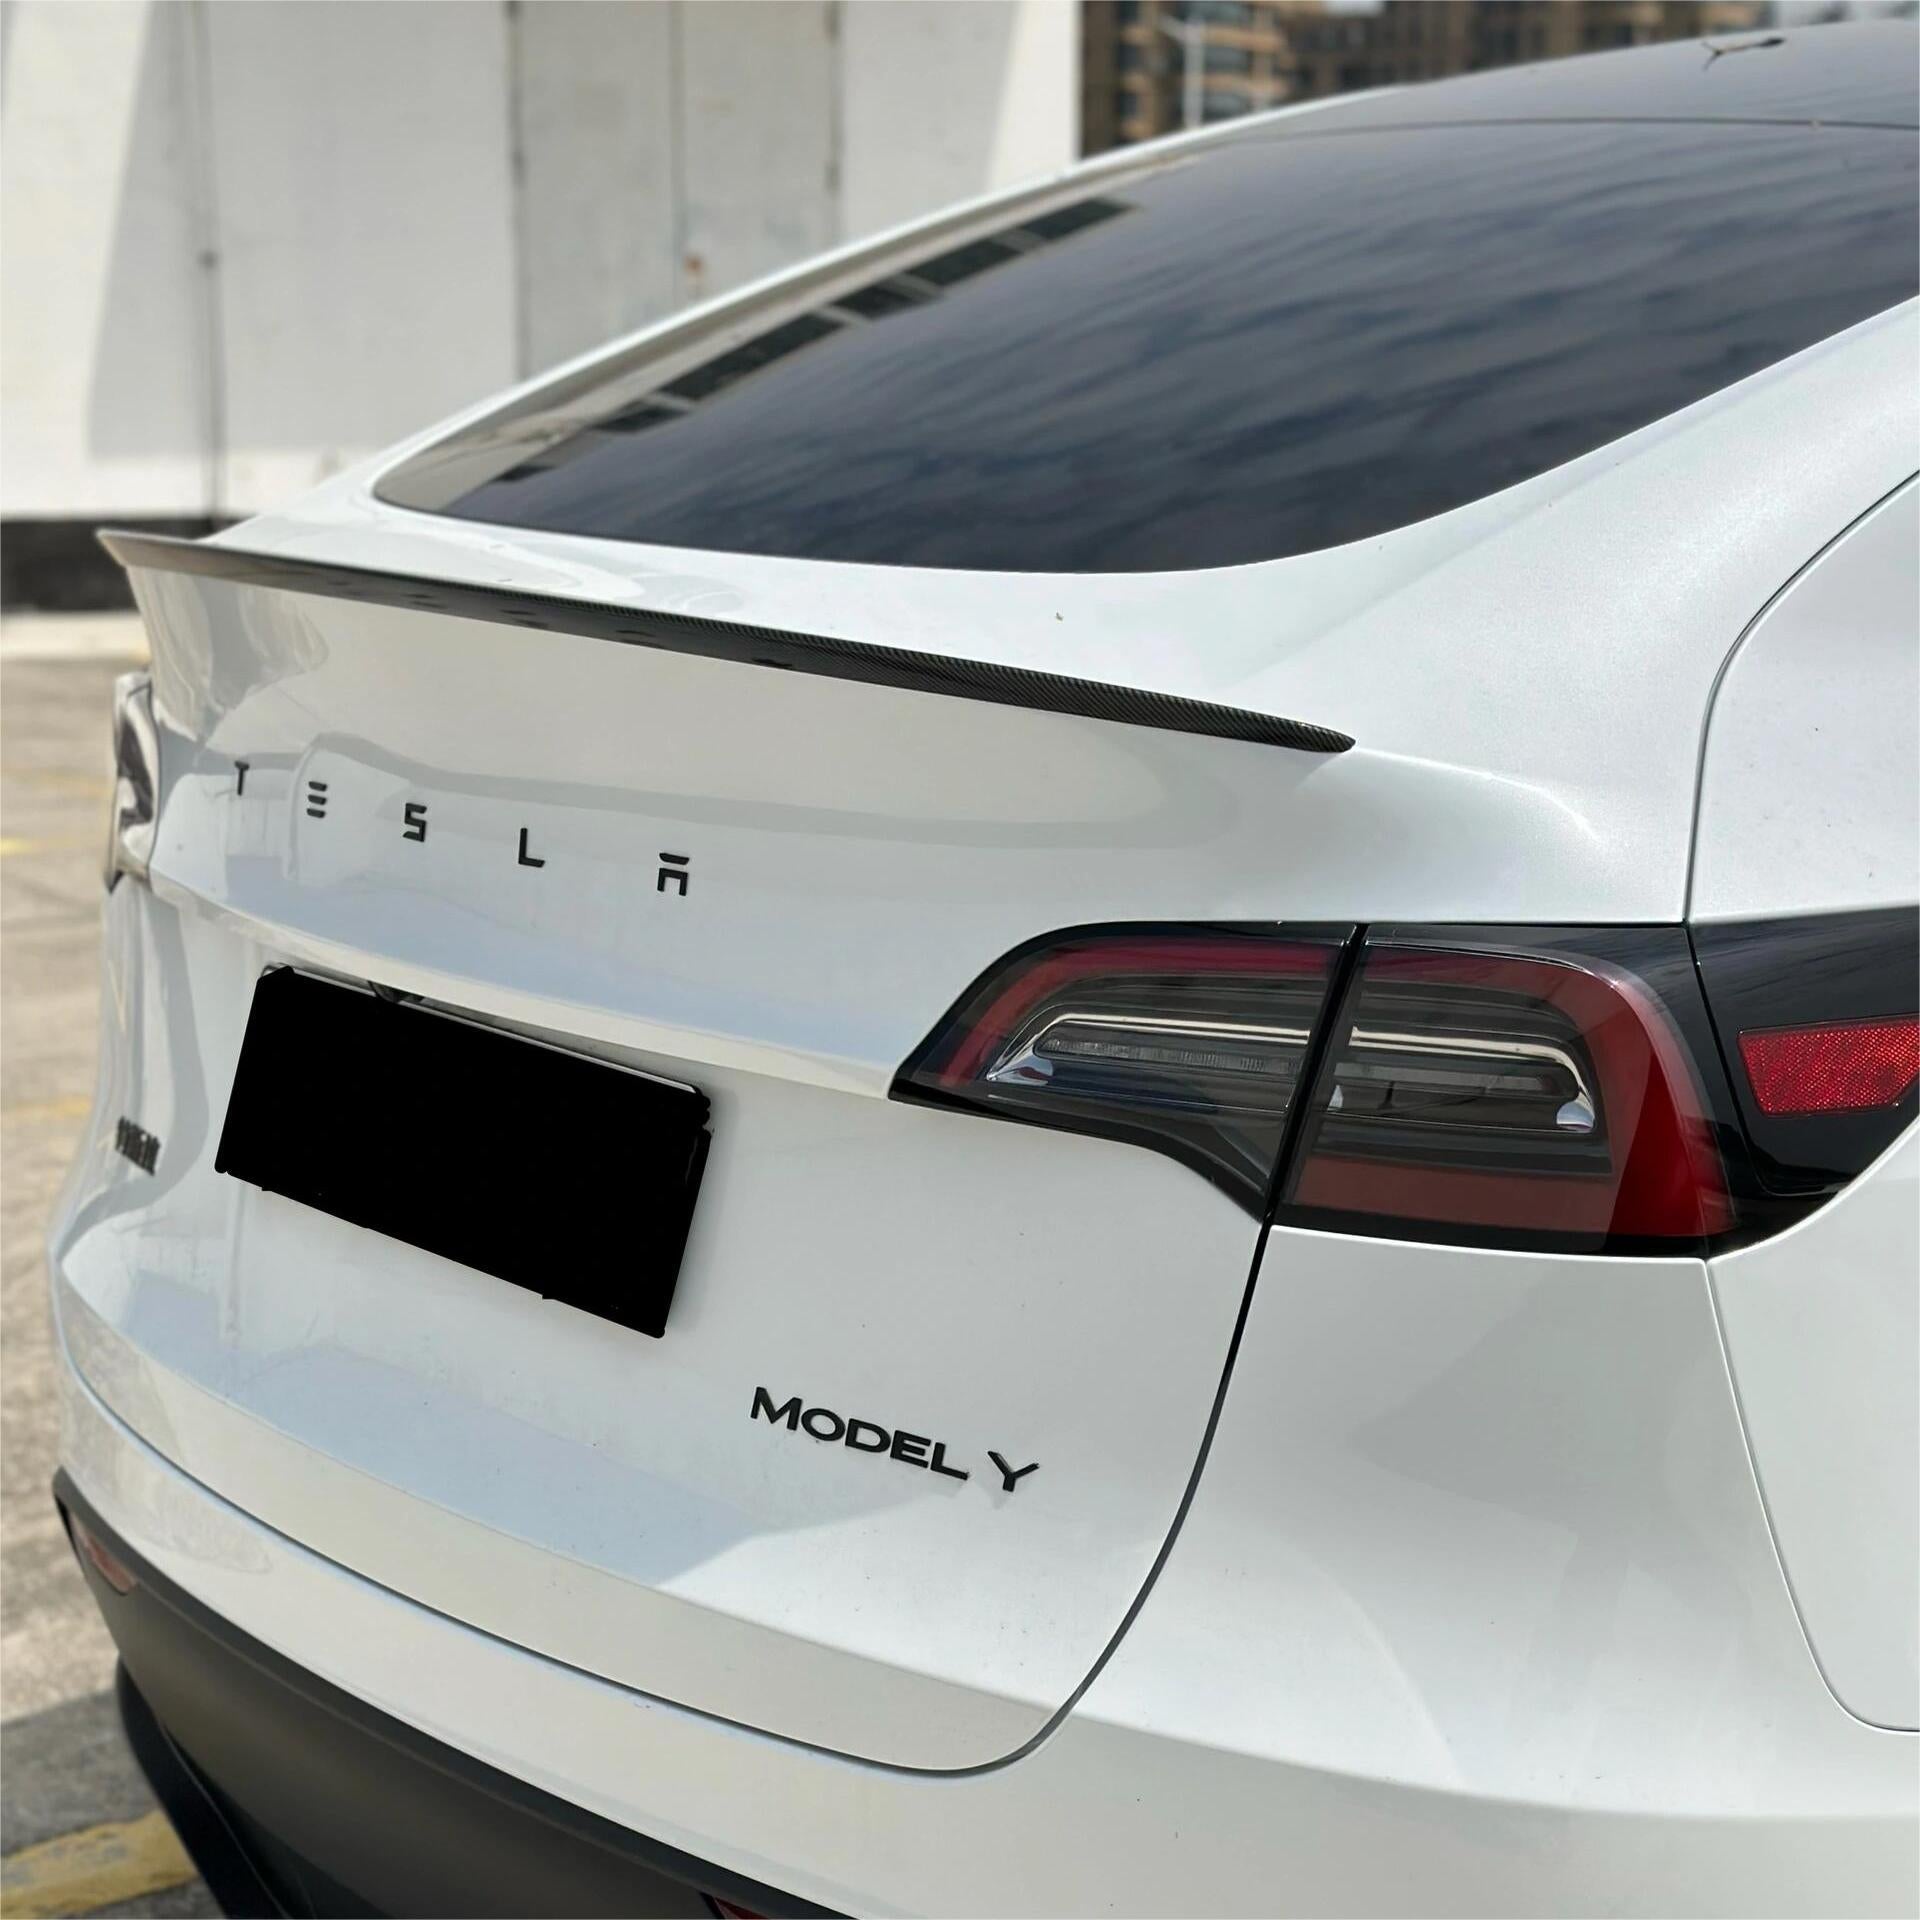 Tesery Tesla Model 3 Highland / Y Spoiler Performance OEM Style - Dry Carbon Fiber Exterior Mods - Tesery Official Store